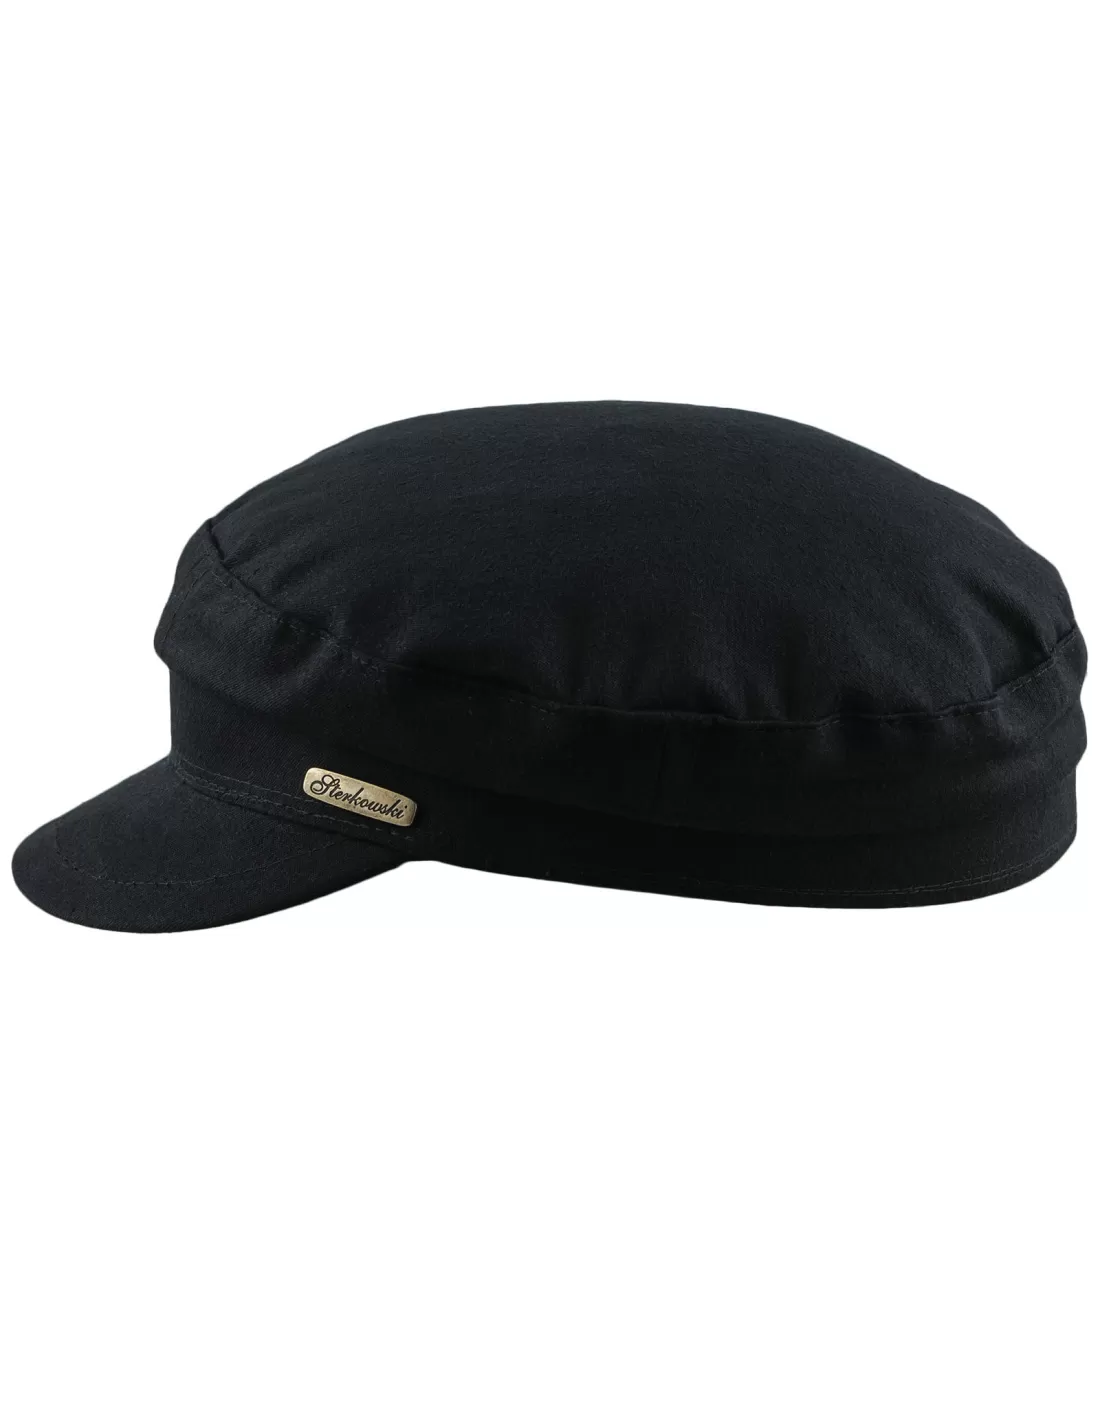 Trawler- naval style fisherman hat made of pure cotton, Sterkowski.com